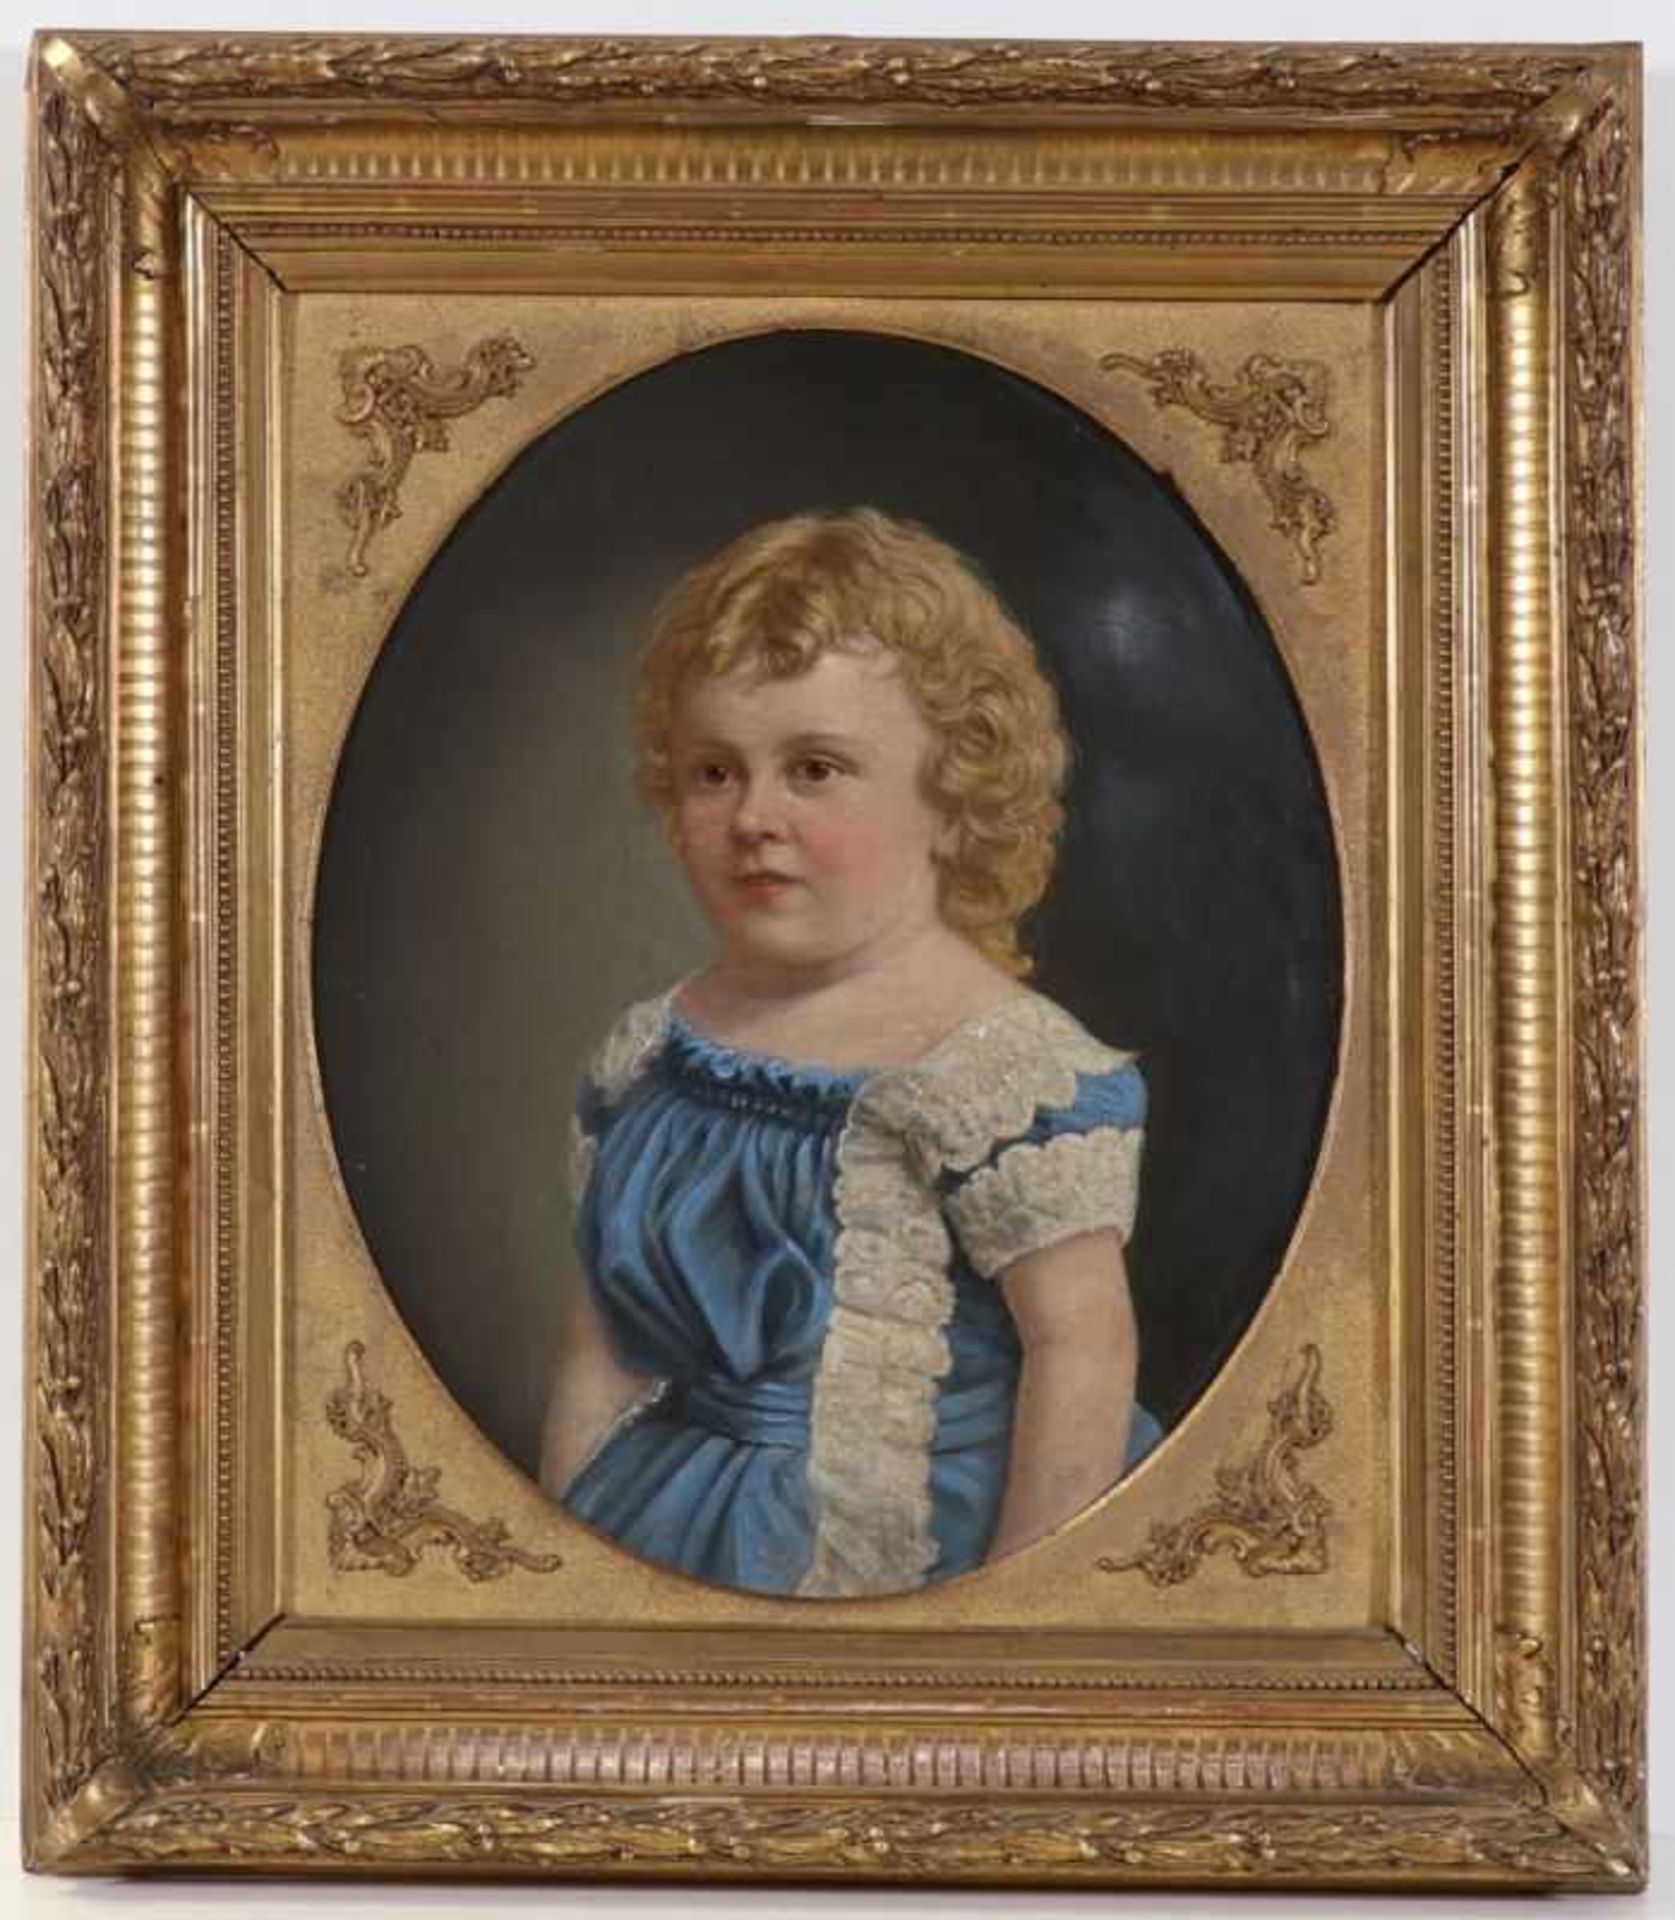 Künstler des Biedermeier- Porträt eines Kindes - Öl/Lwd. 44 x 36 cm (ovaler Rahmenausschnitt), 48